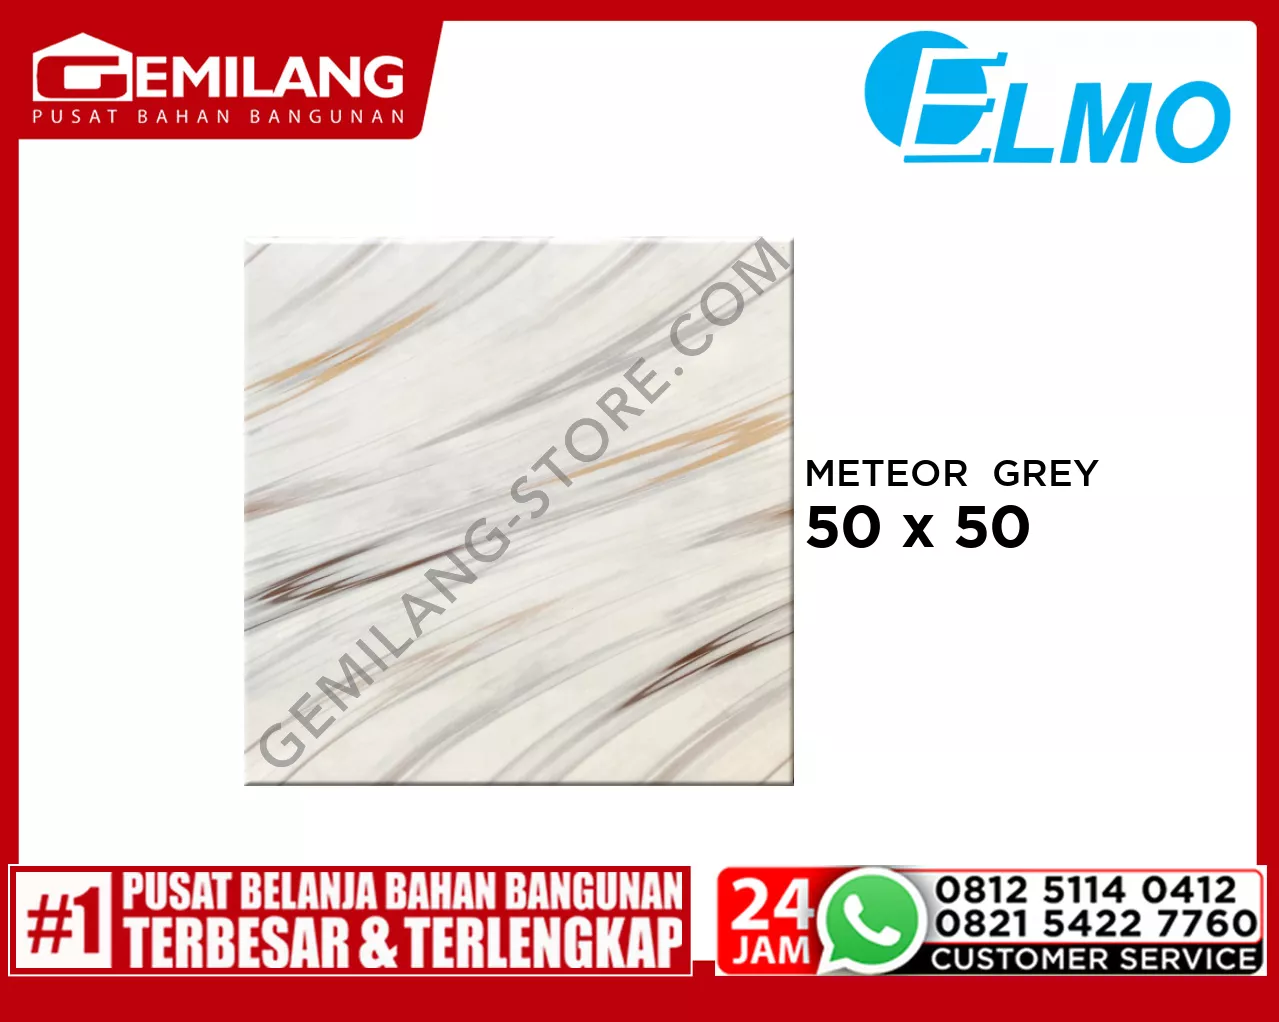 ELMO METEOR  GREY 50 x 50